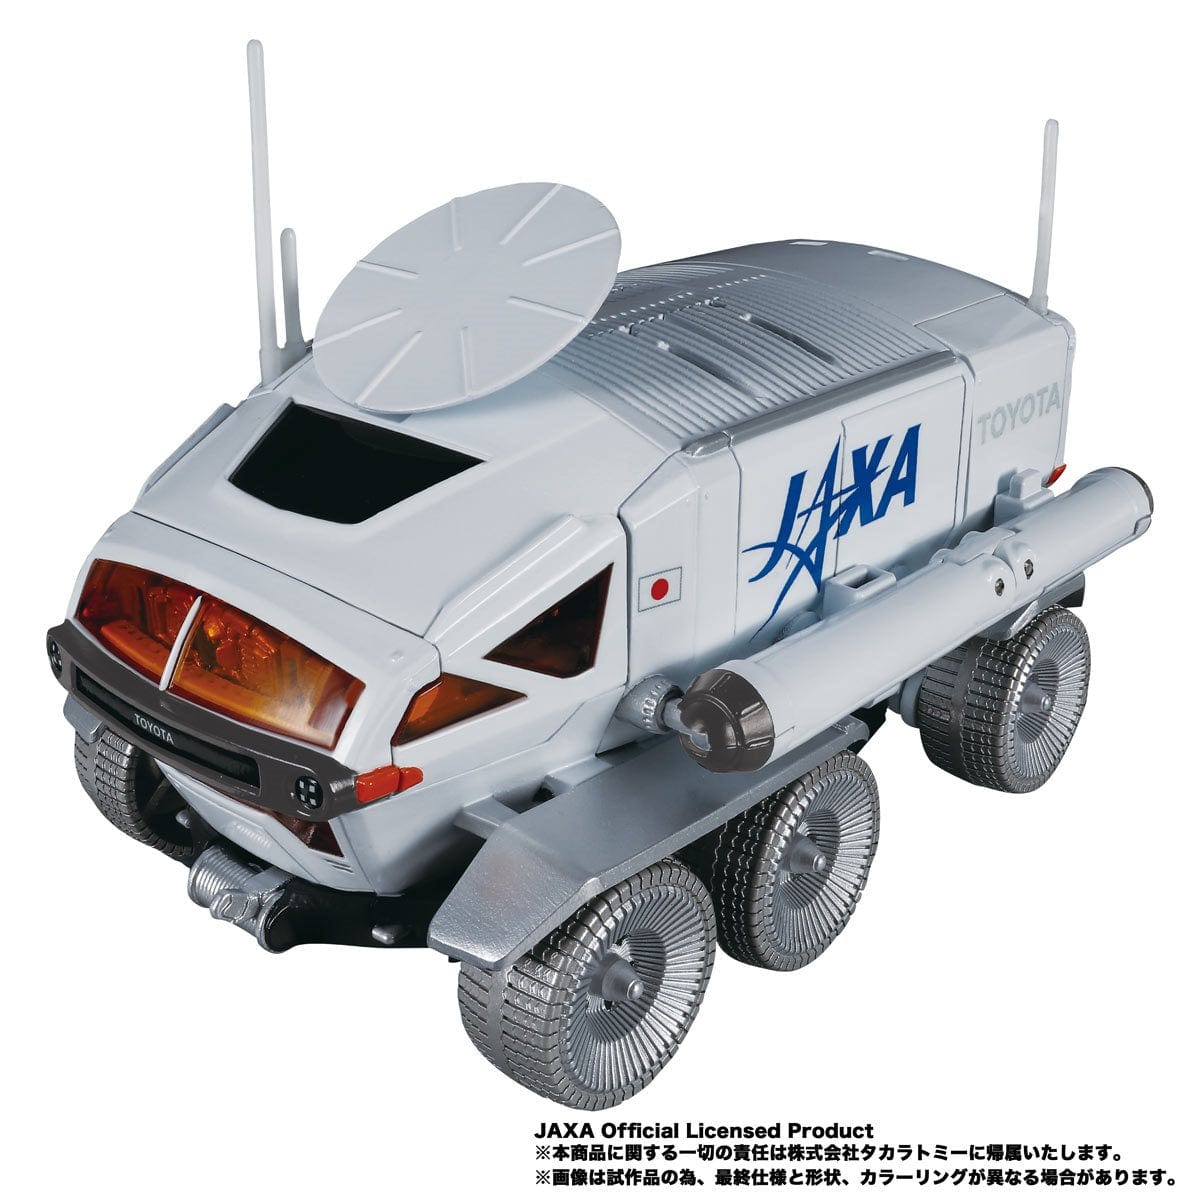 Transformers Toyota Lunar Cruiser Prime - Exclusive